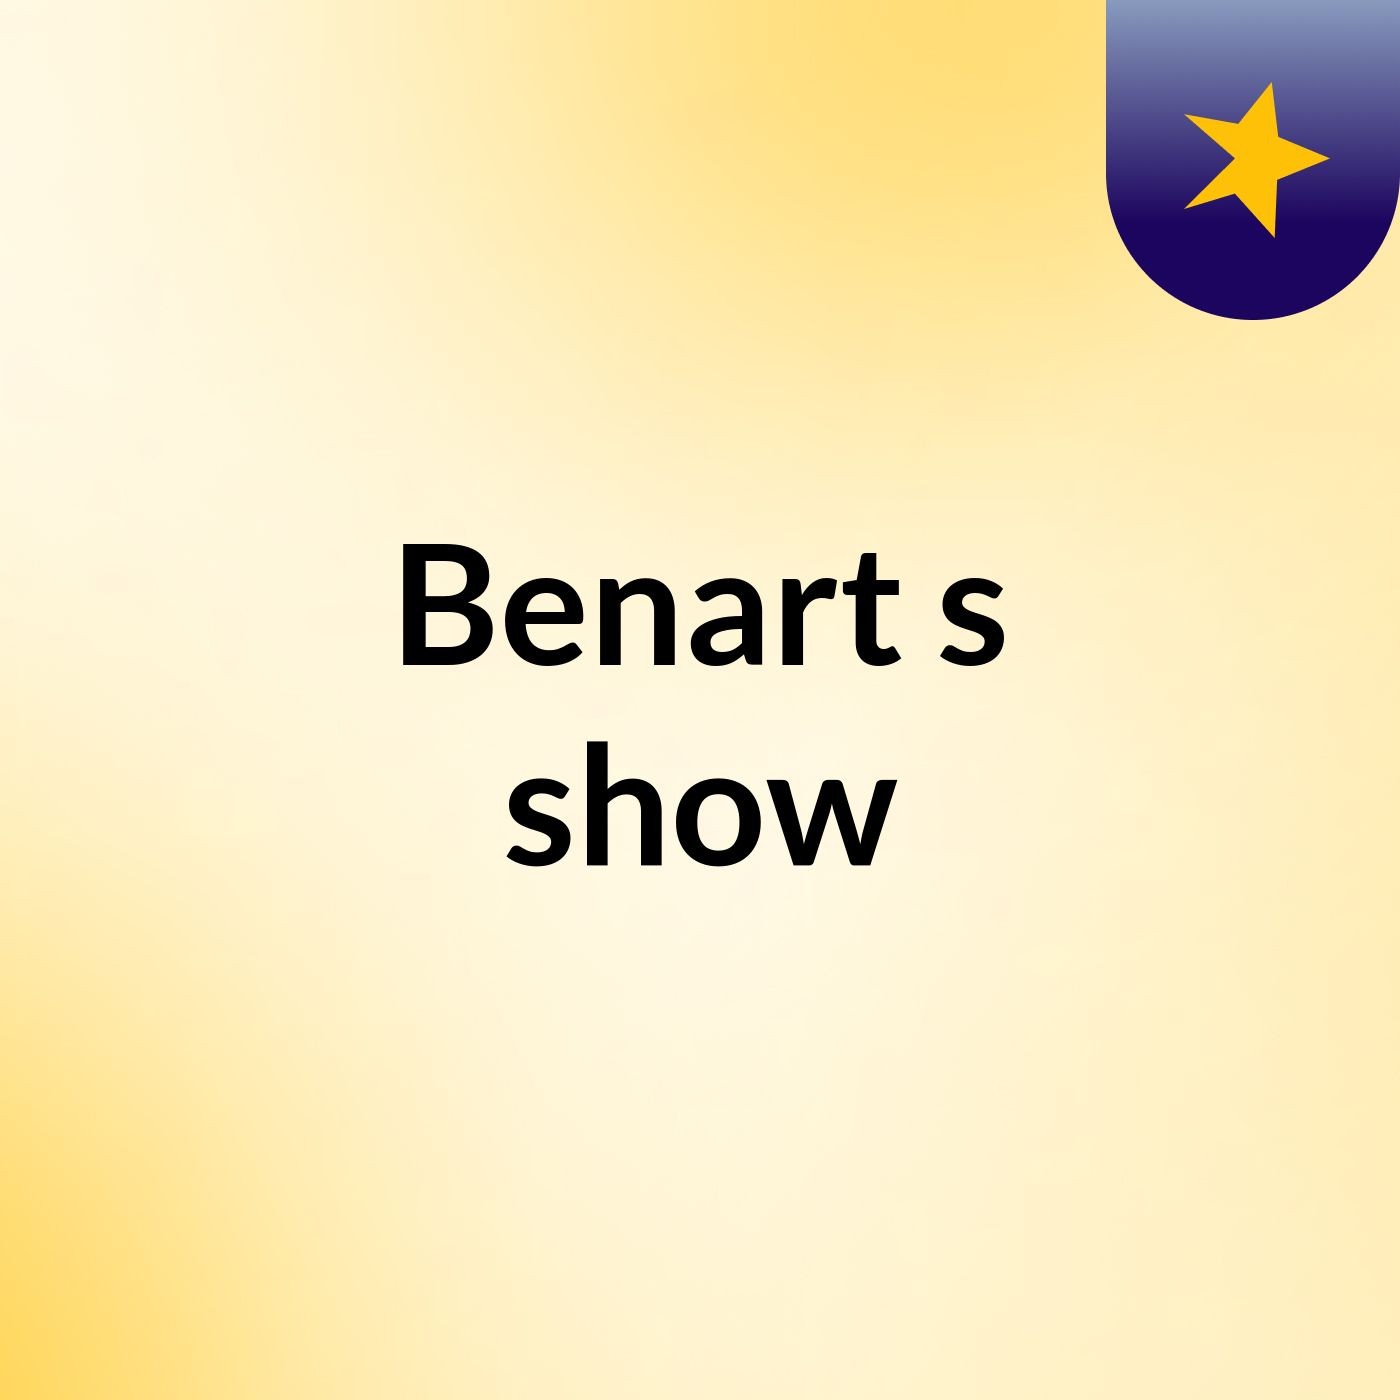 Benart's show